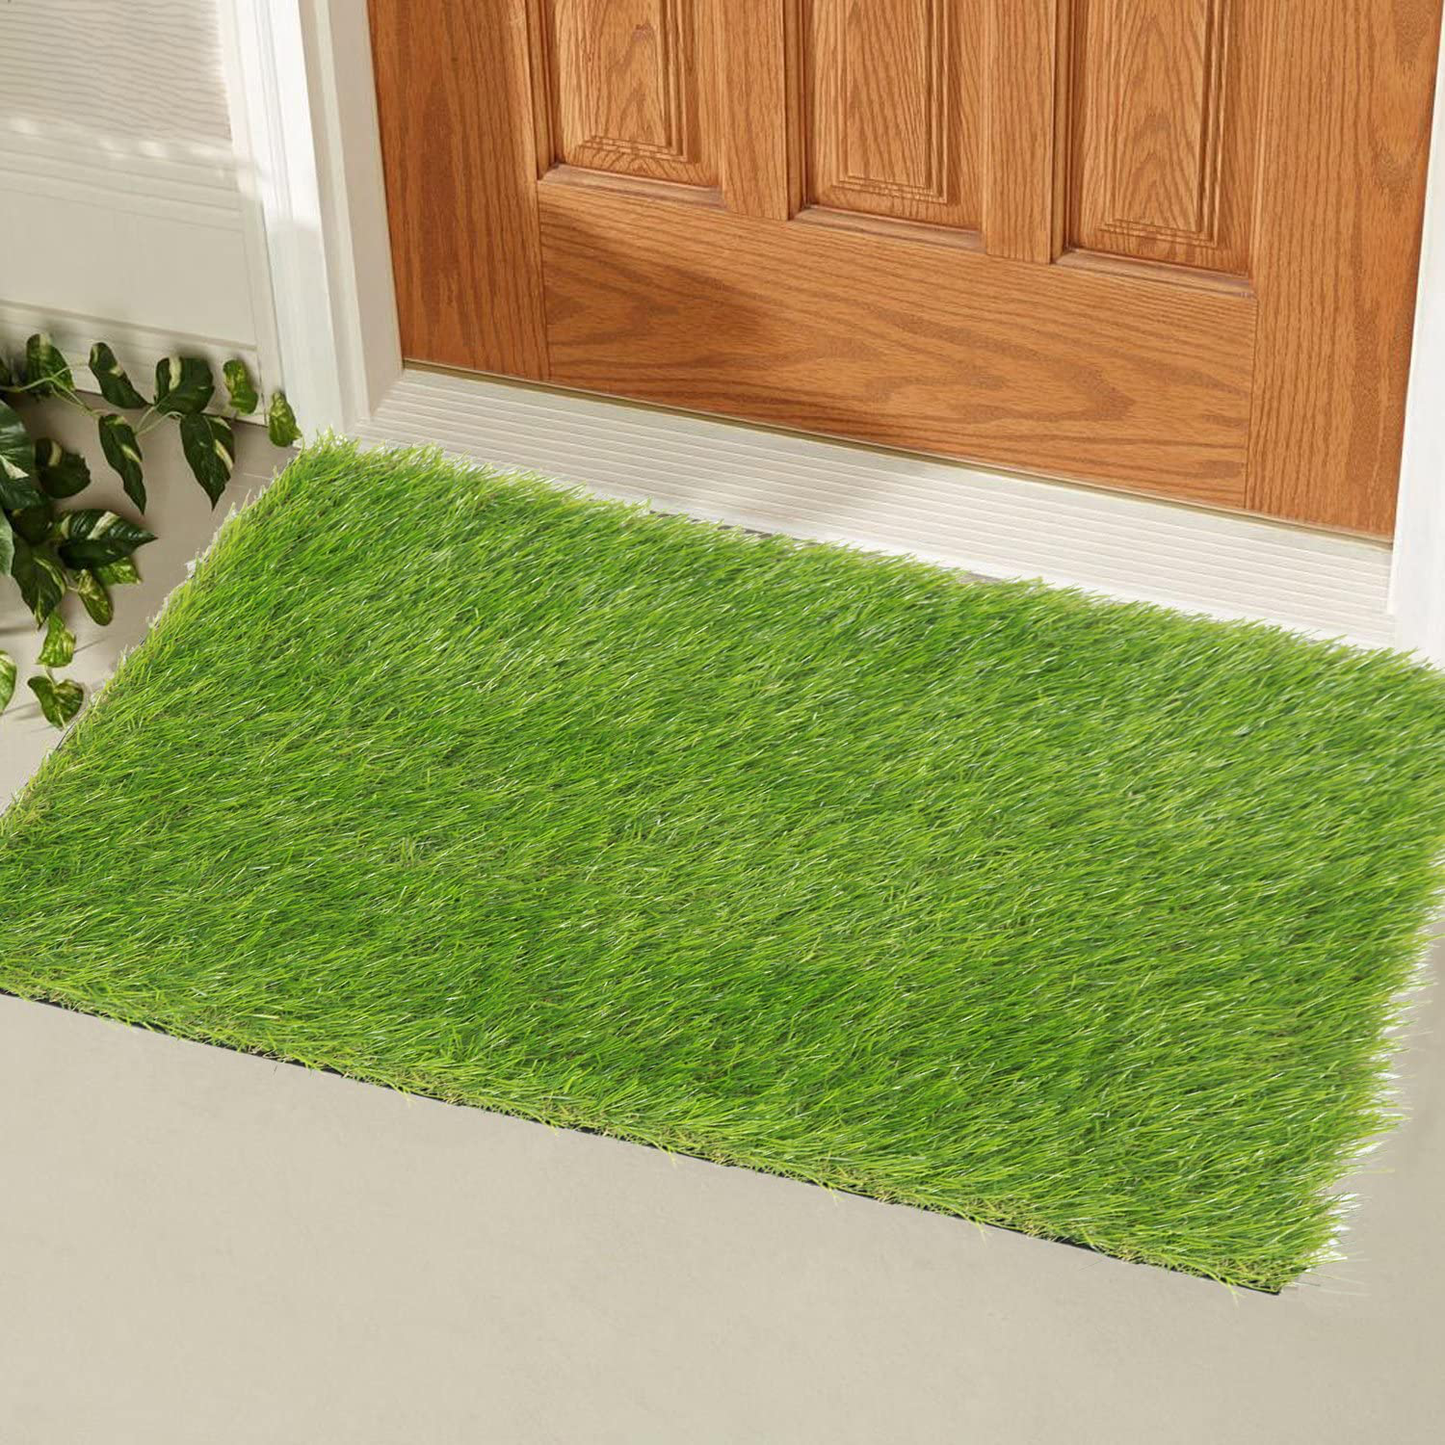 ECO MATRIX Artificial Grass Dog Training Door Mat Pee Pad Fake Grass Doormat Pet Turf Soft Green Lawn Rug Synthetic Grass Carpet